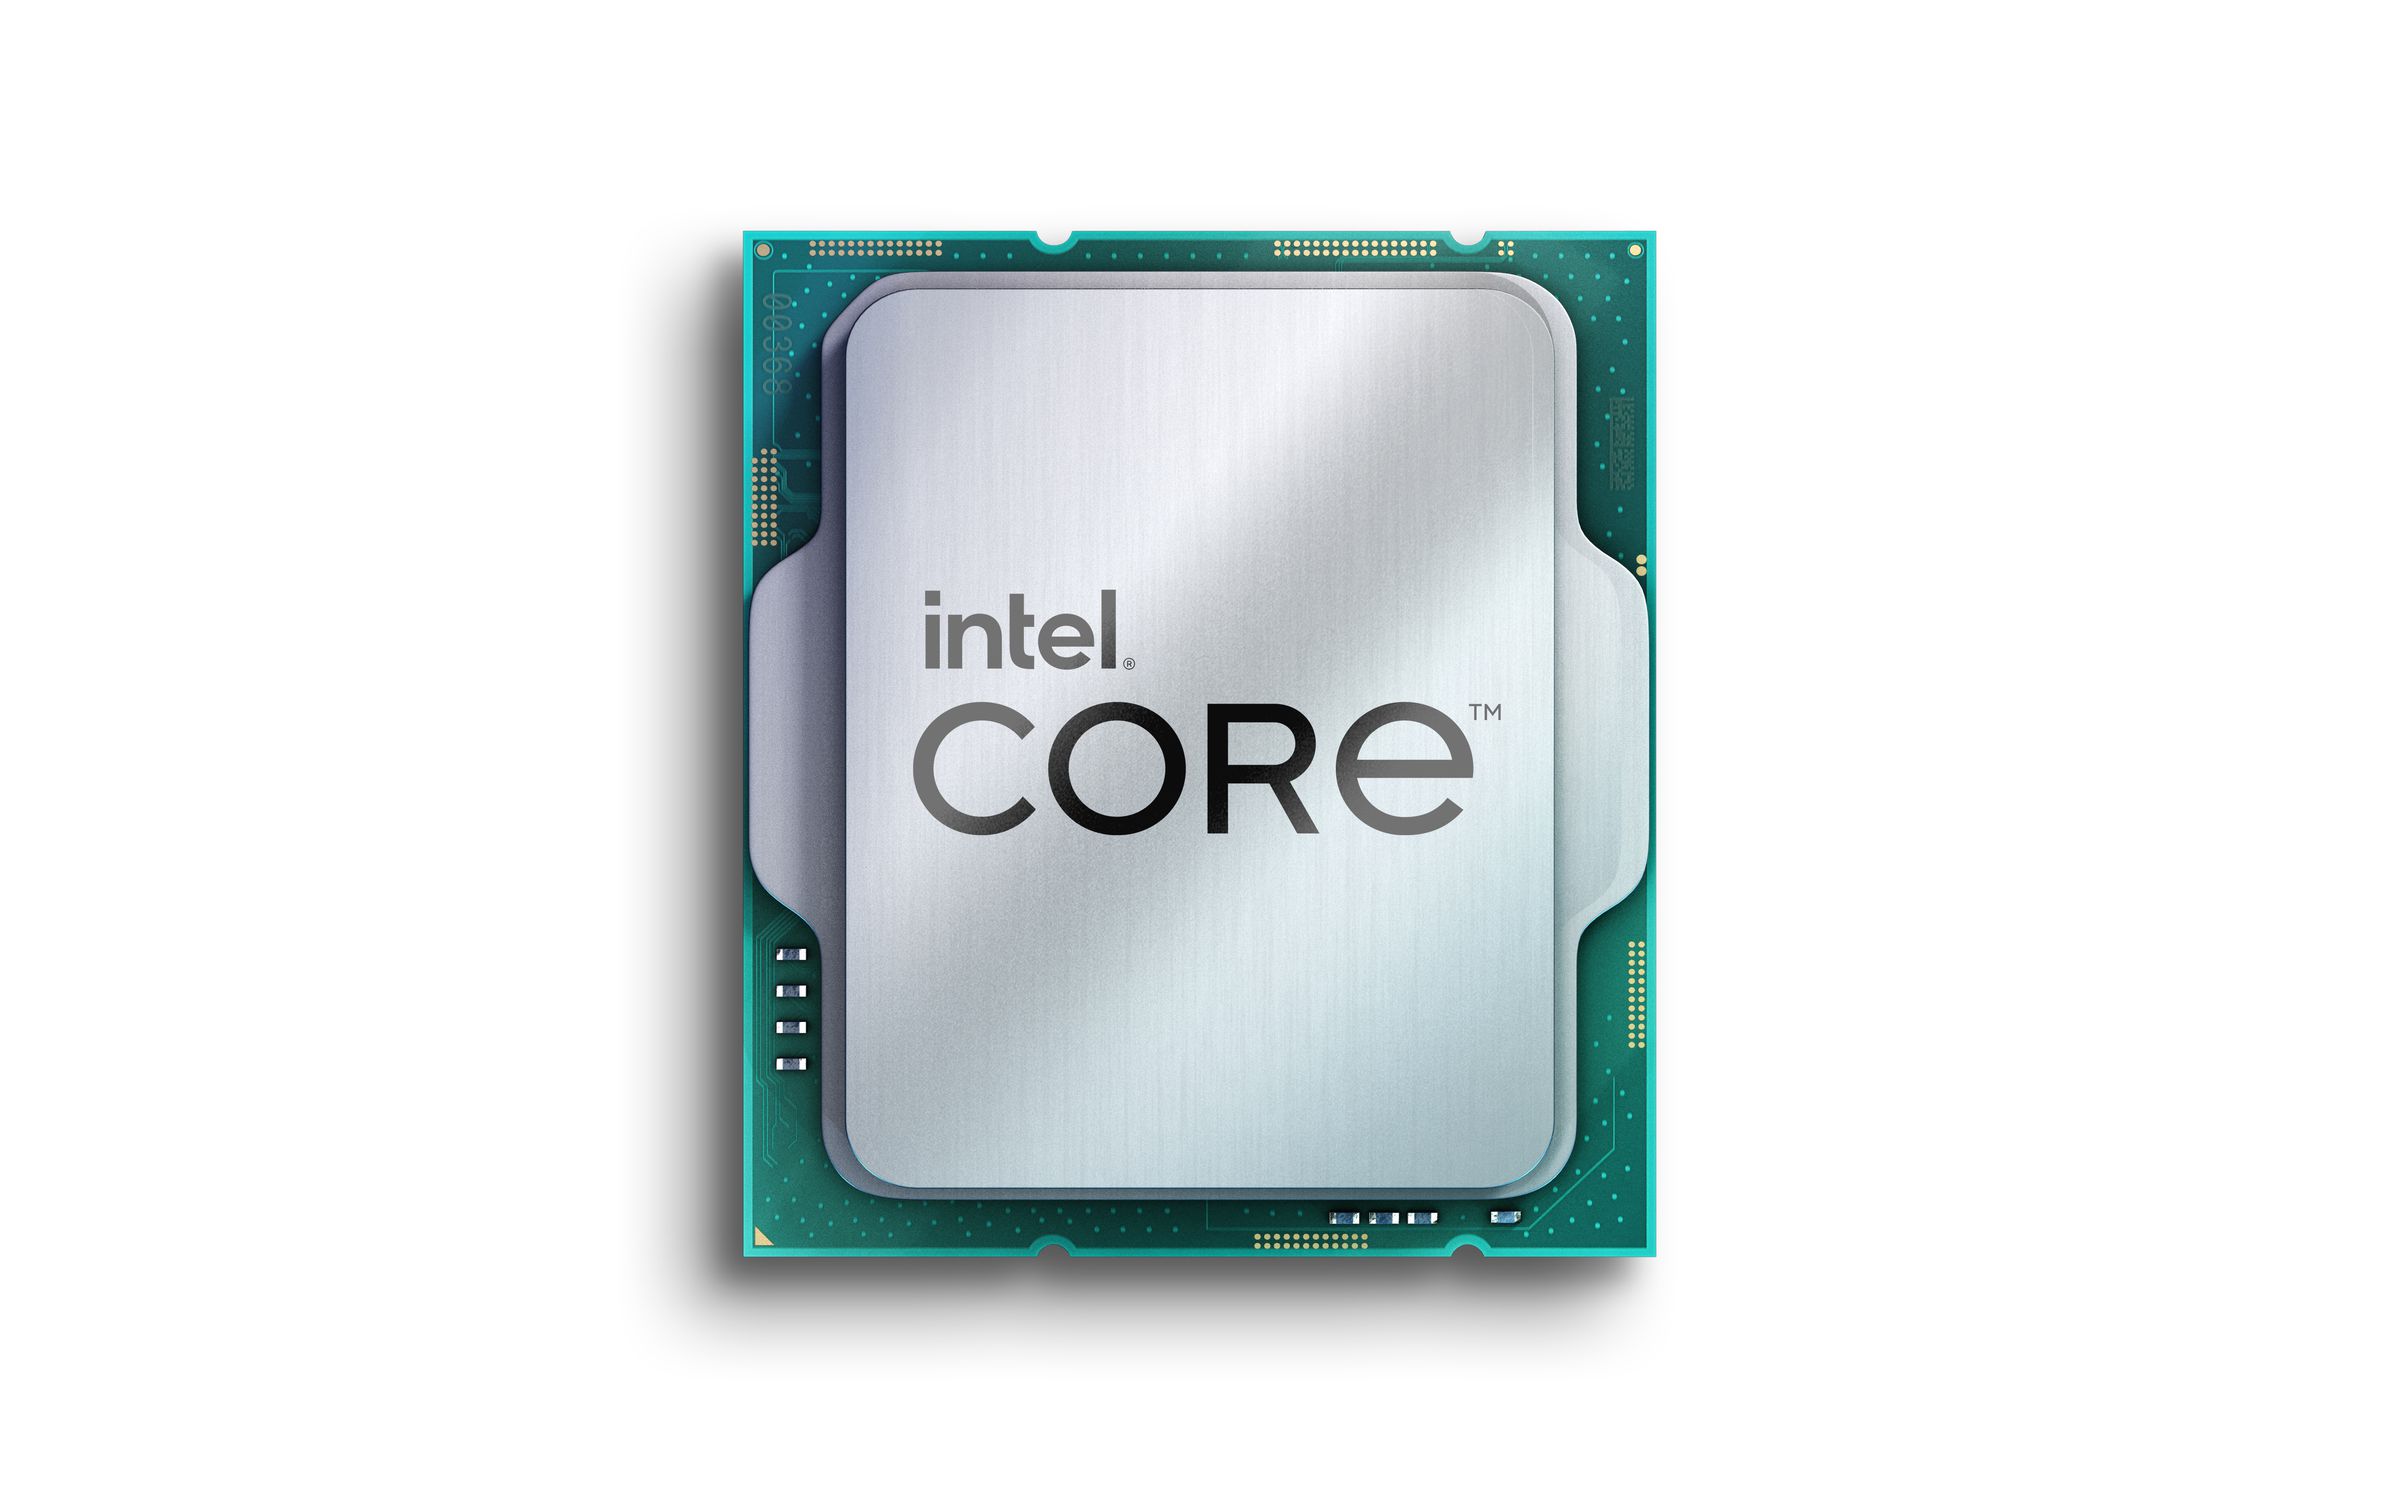 Intel’s thirteenth Gen processors arrive October twentieth with 9 flagship Core i9-13900K